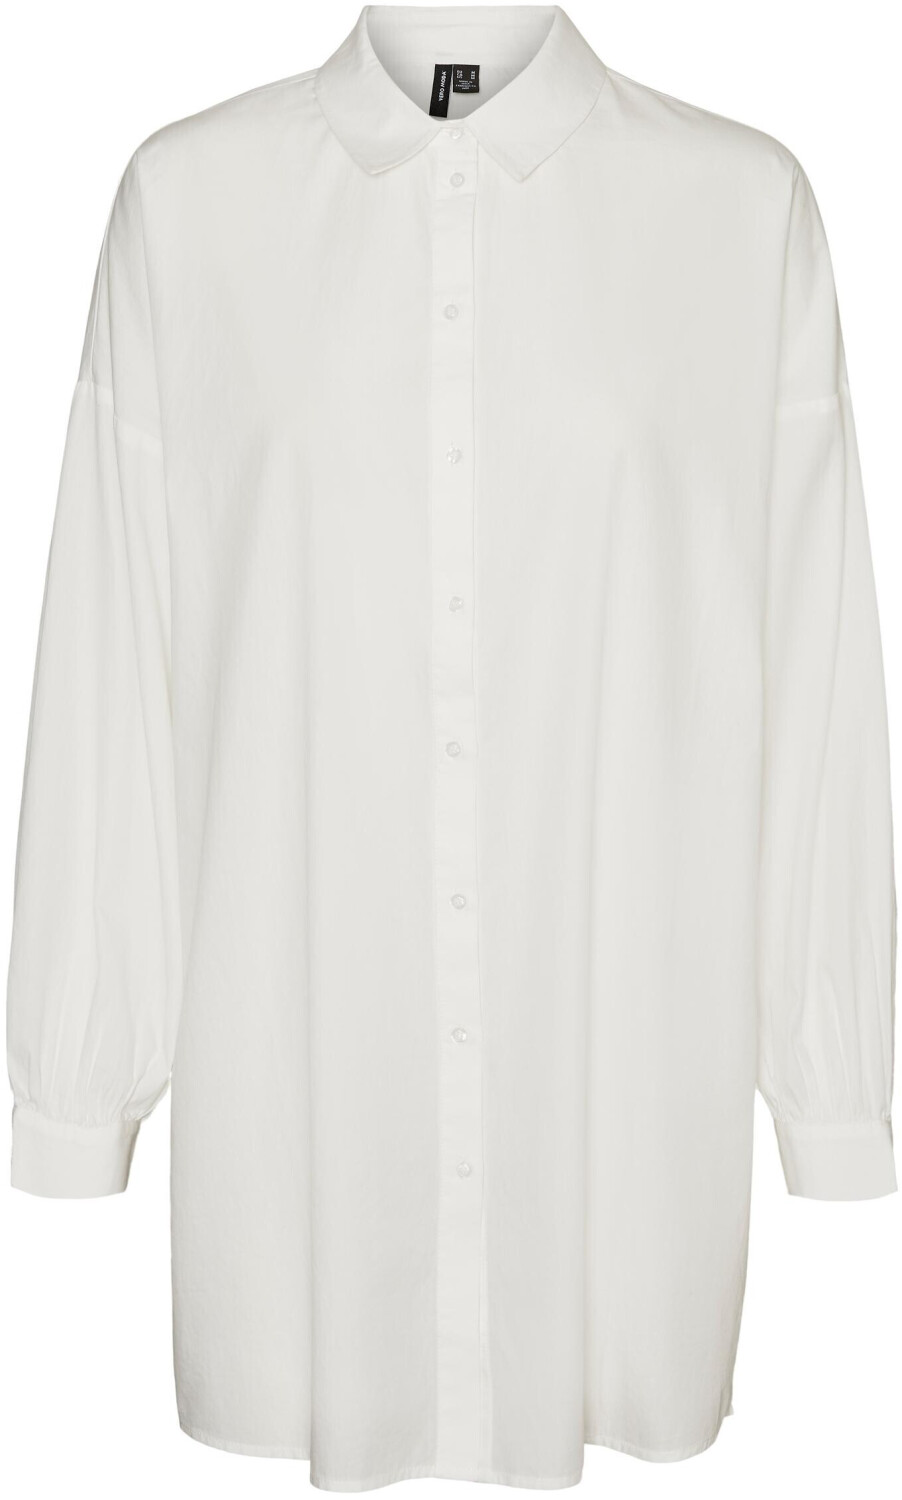 Vero Moda 15,99 Noos white Ga Oversize Shirt ab | Preisvergleich L/s (10250576) snow bei Vmbina €